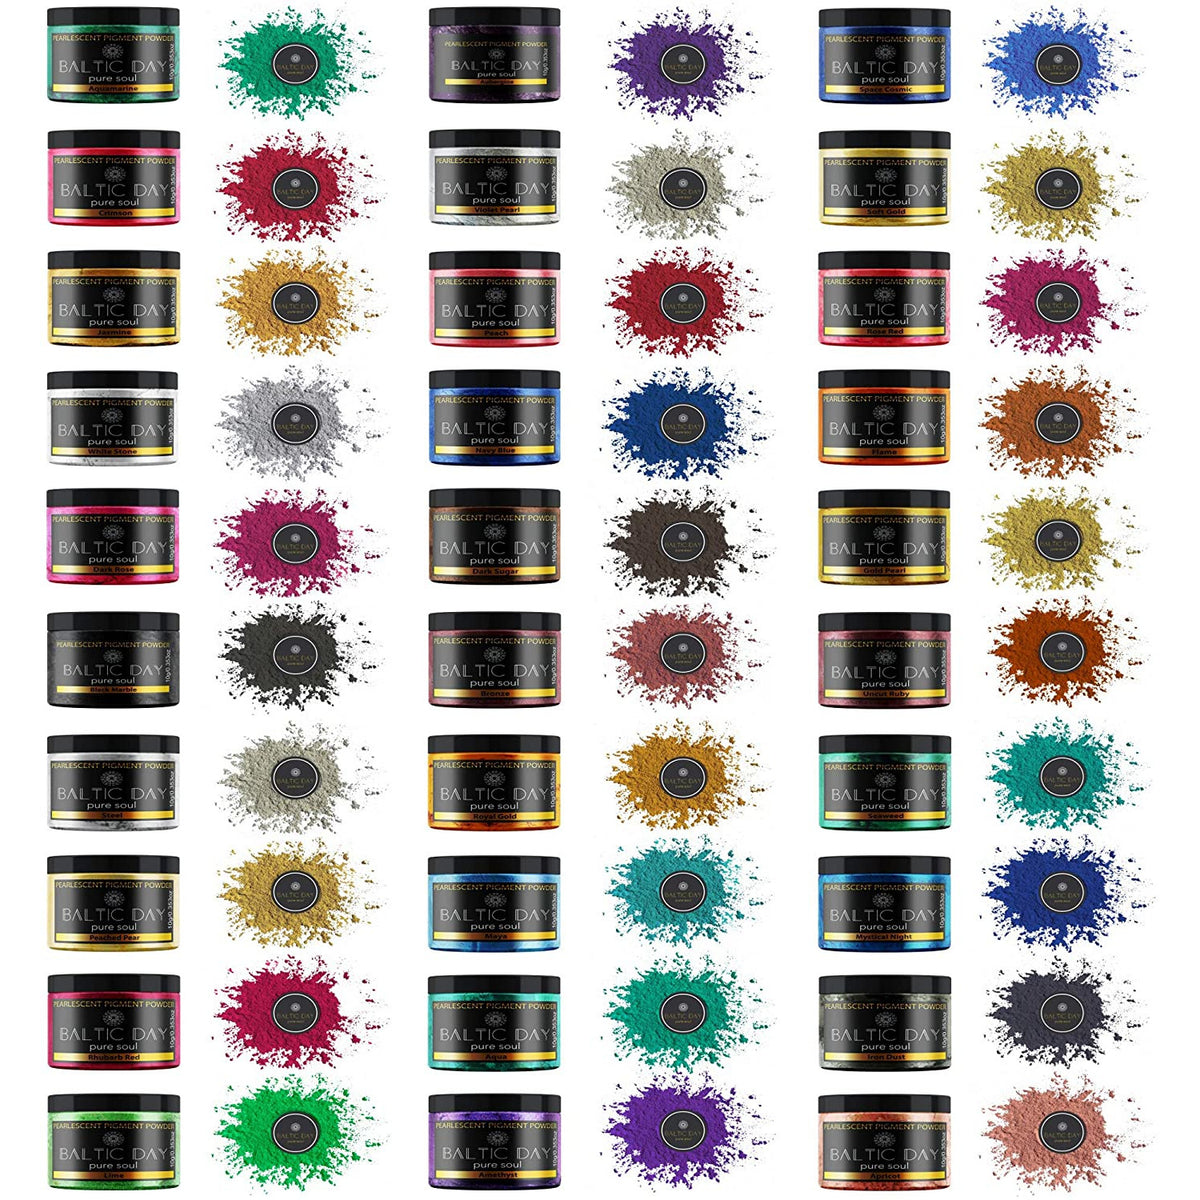 Baltic Day Mica Powder 60 Pigment Powder Colors for Epoxy Resin, Paint Dye,  Soap Making, Slime, Bath Bombs, Candles, Nail Polish, Lips 